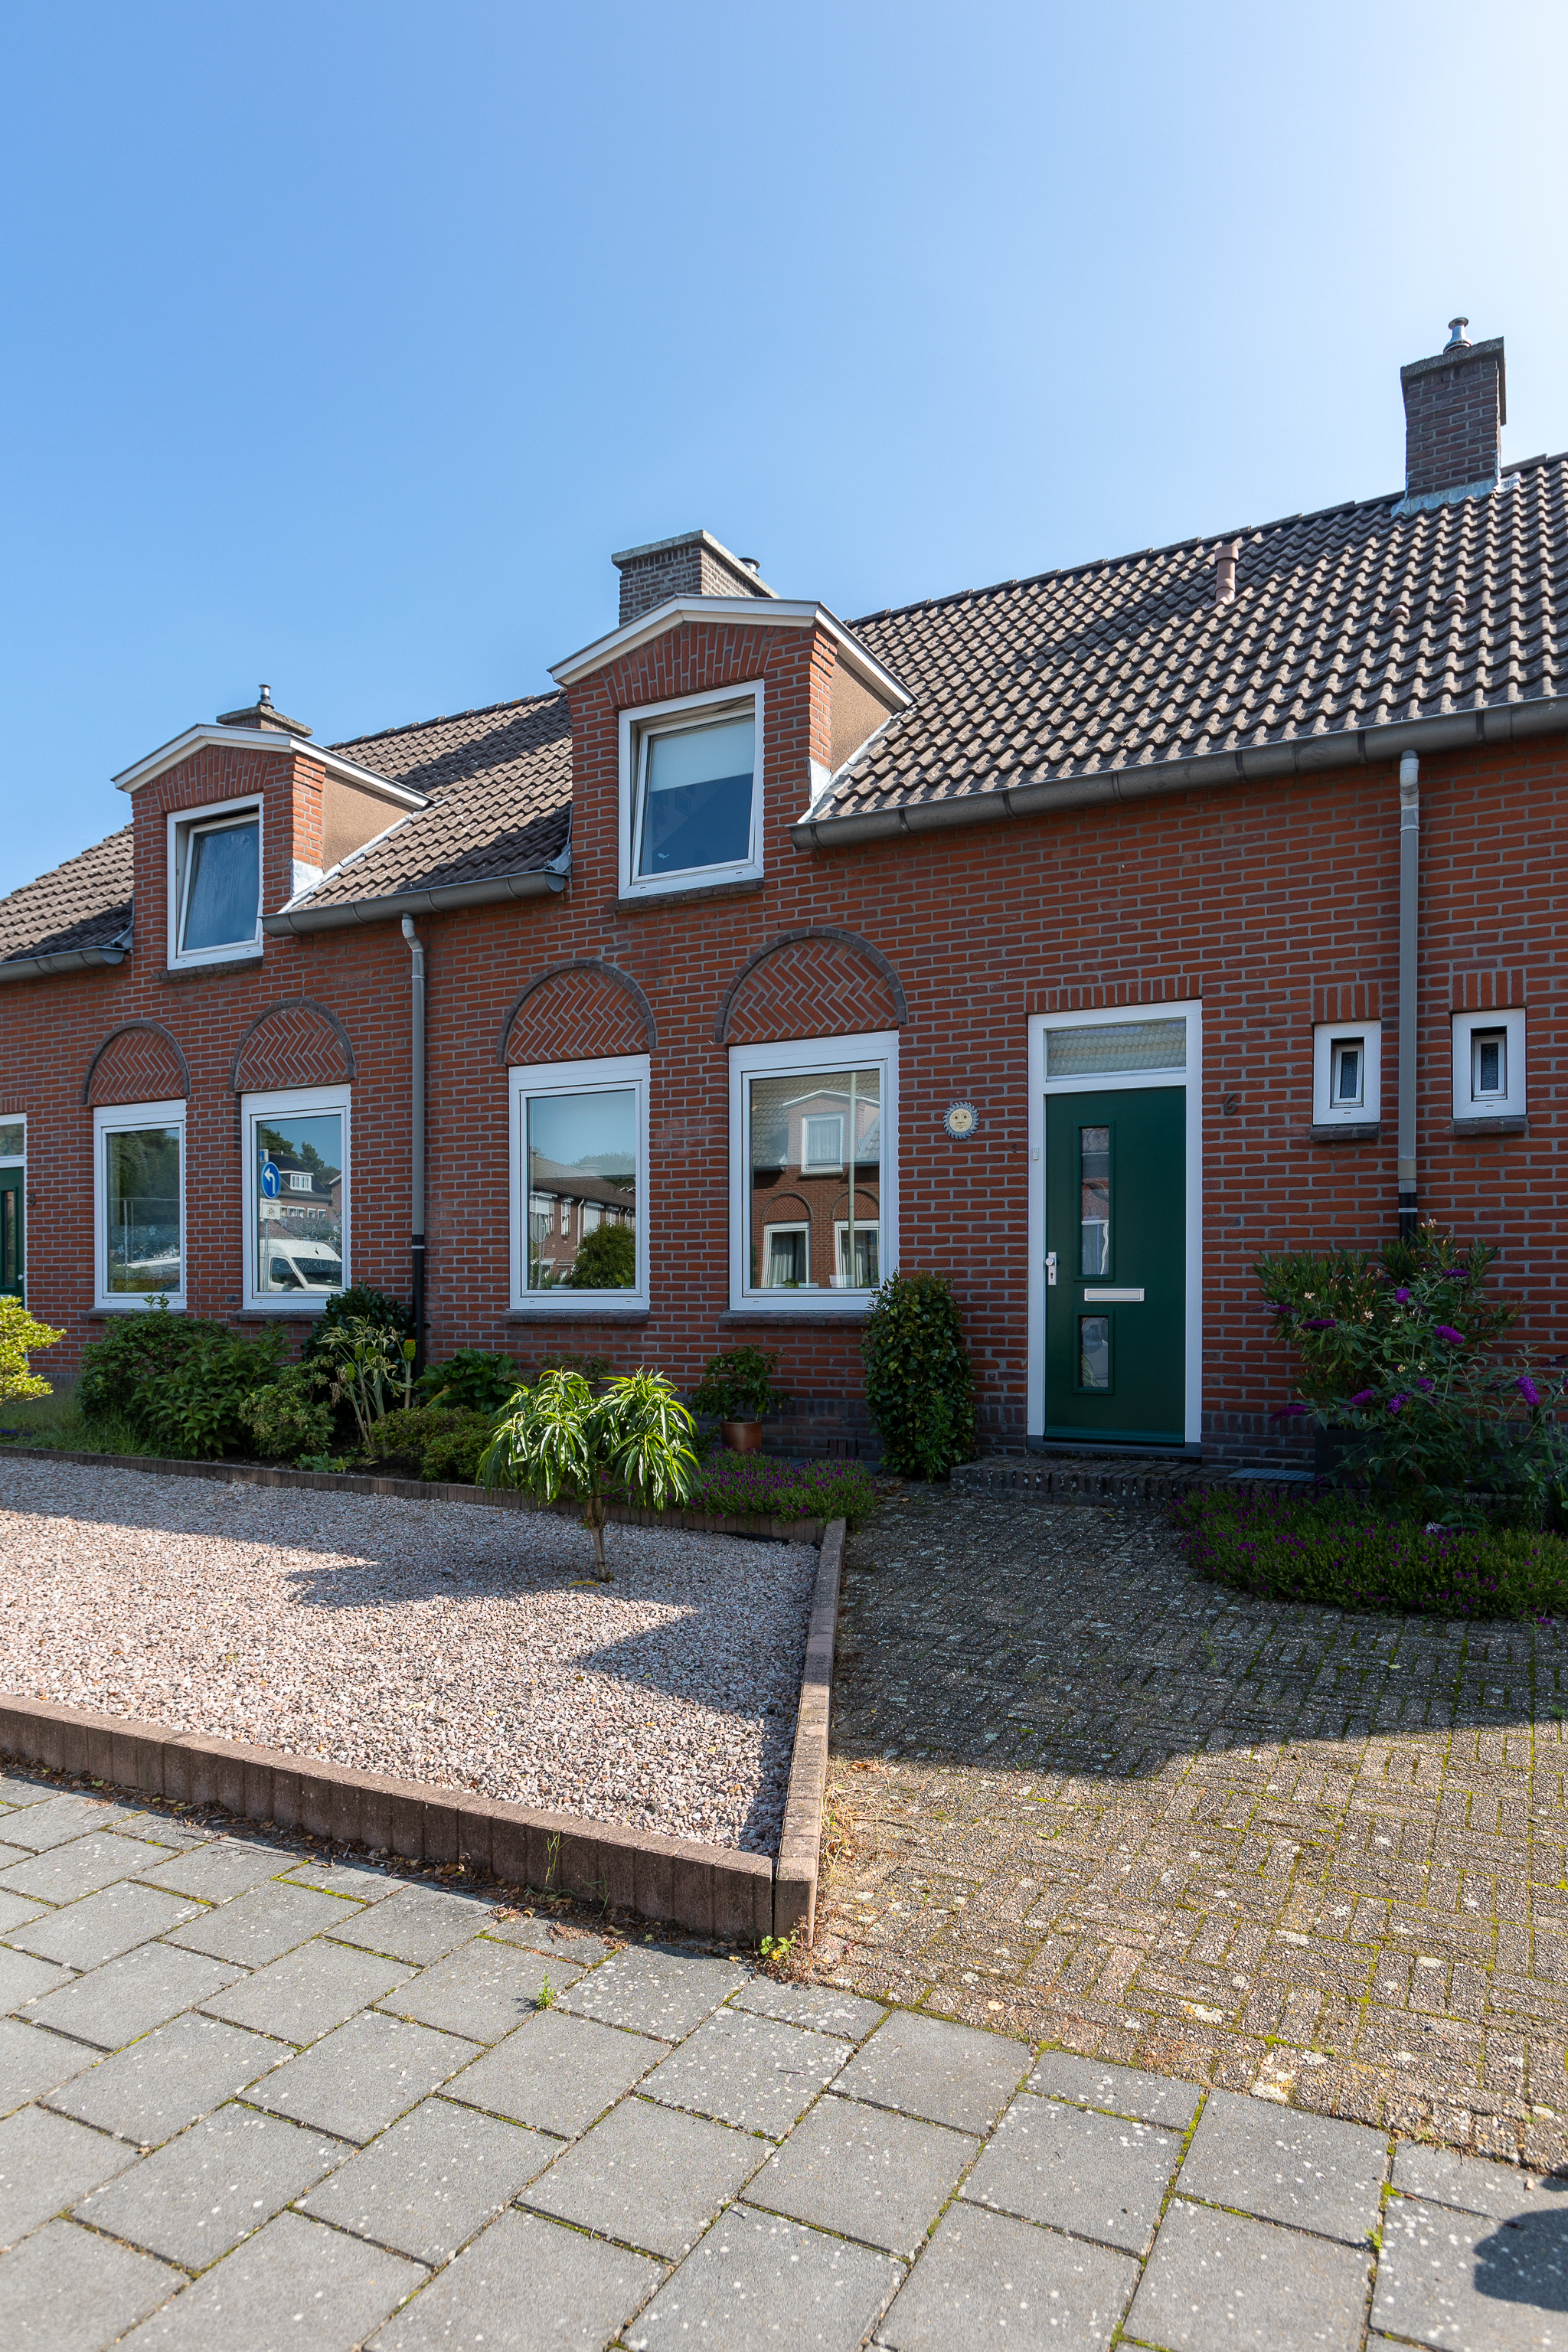 Johan van Oldenbarneveldtstraat 6, 6371 CE Landgraaf, Nederland